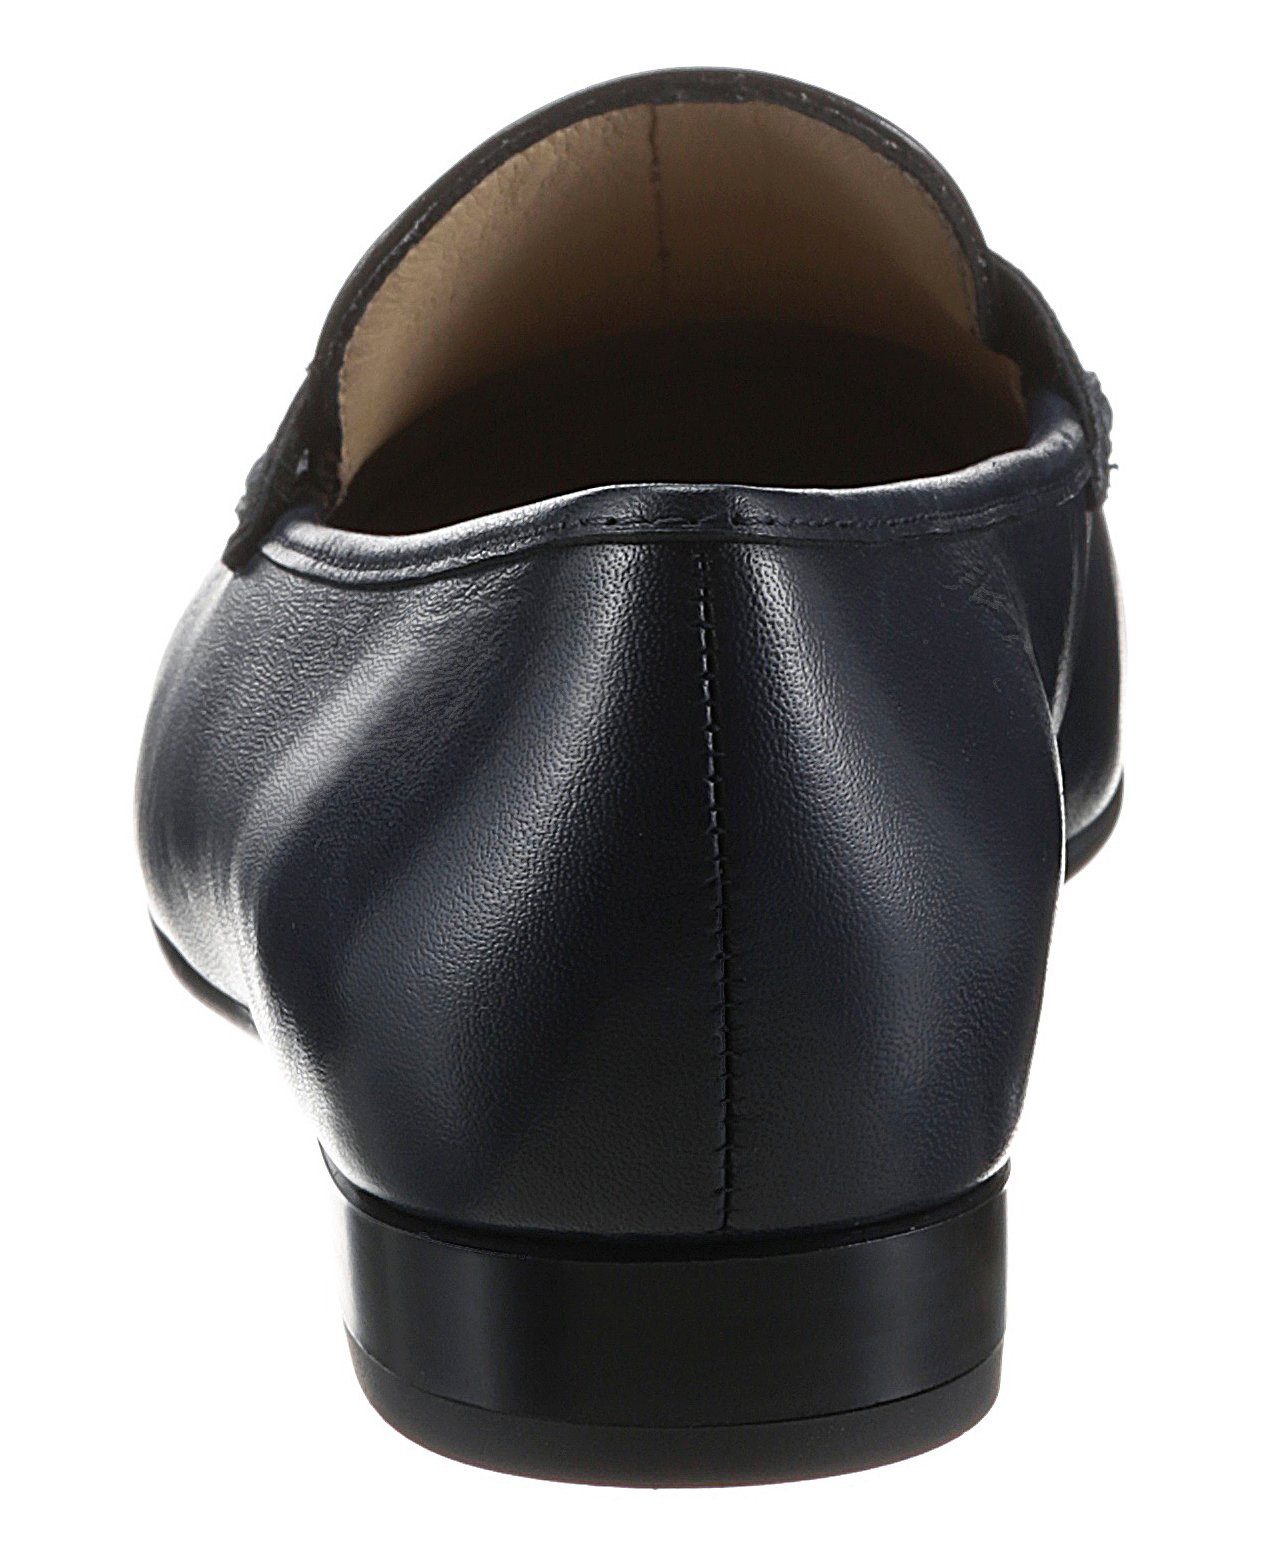 Ara KENT dunkelblau in schmale Slipper eleganter Schuhweite Form